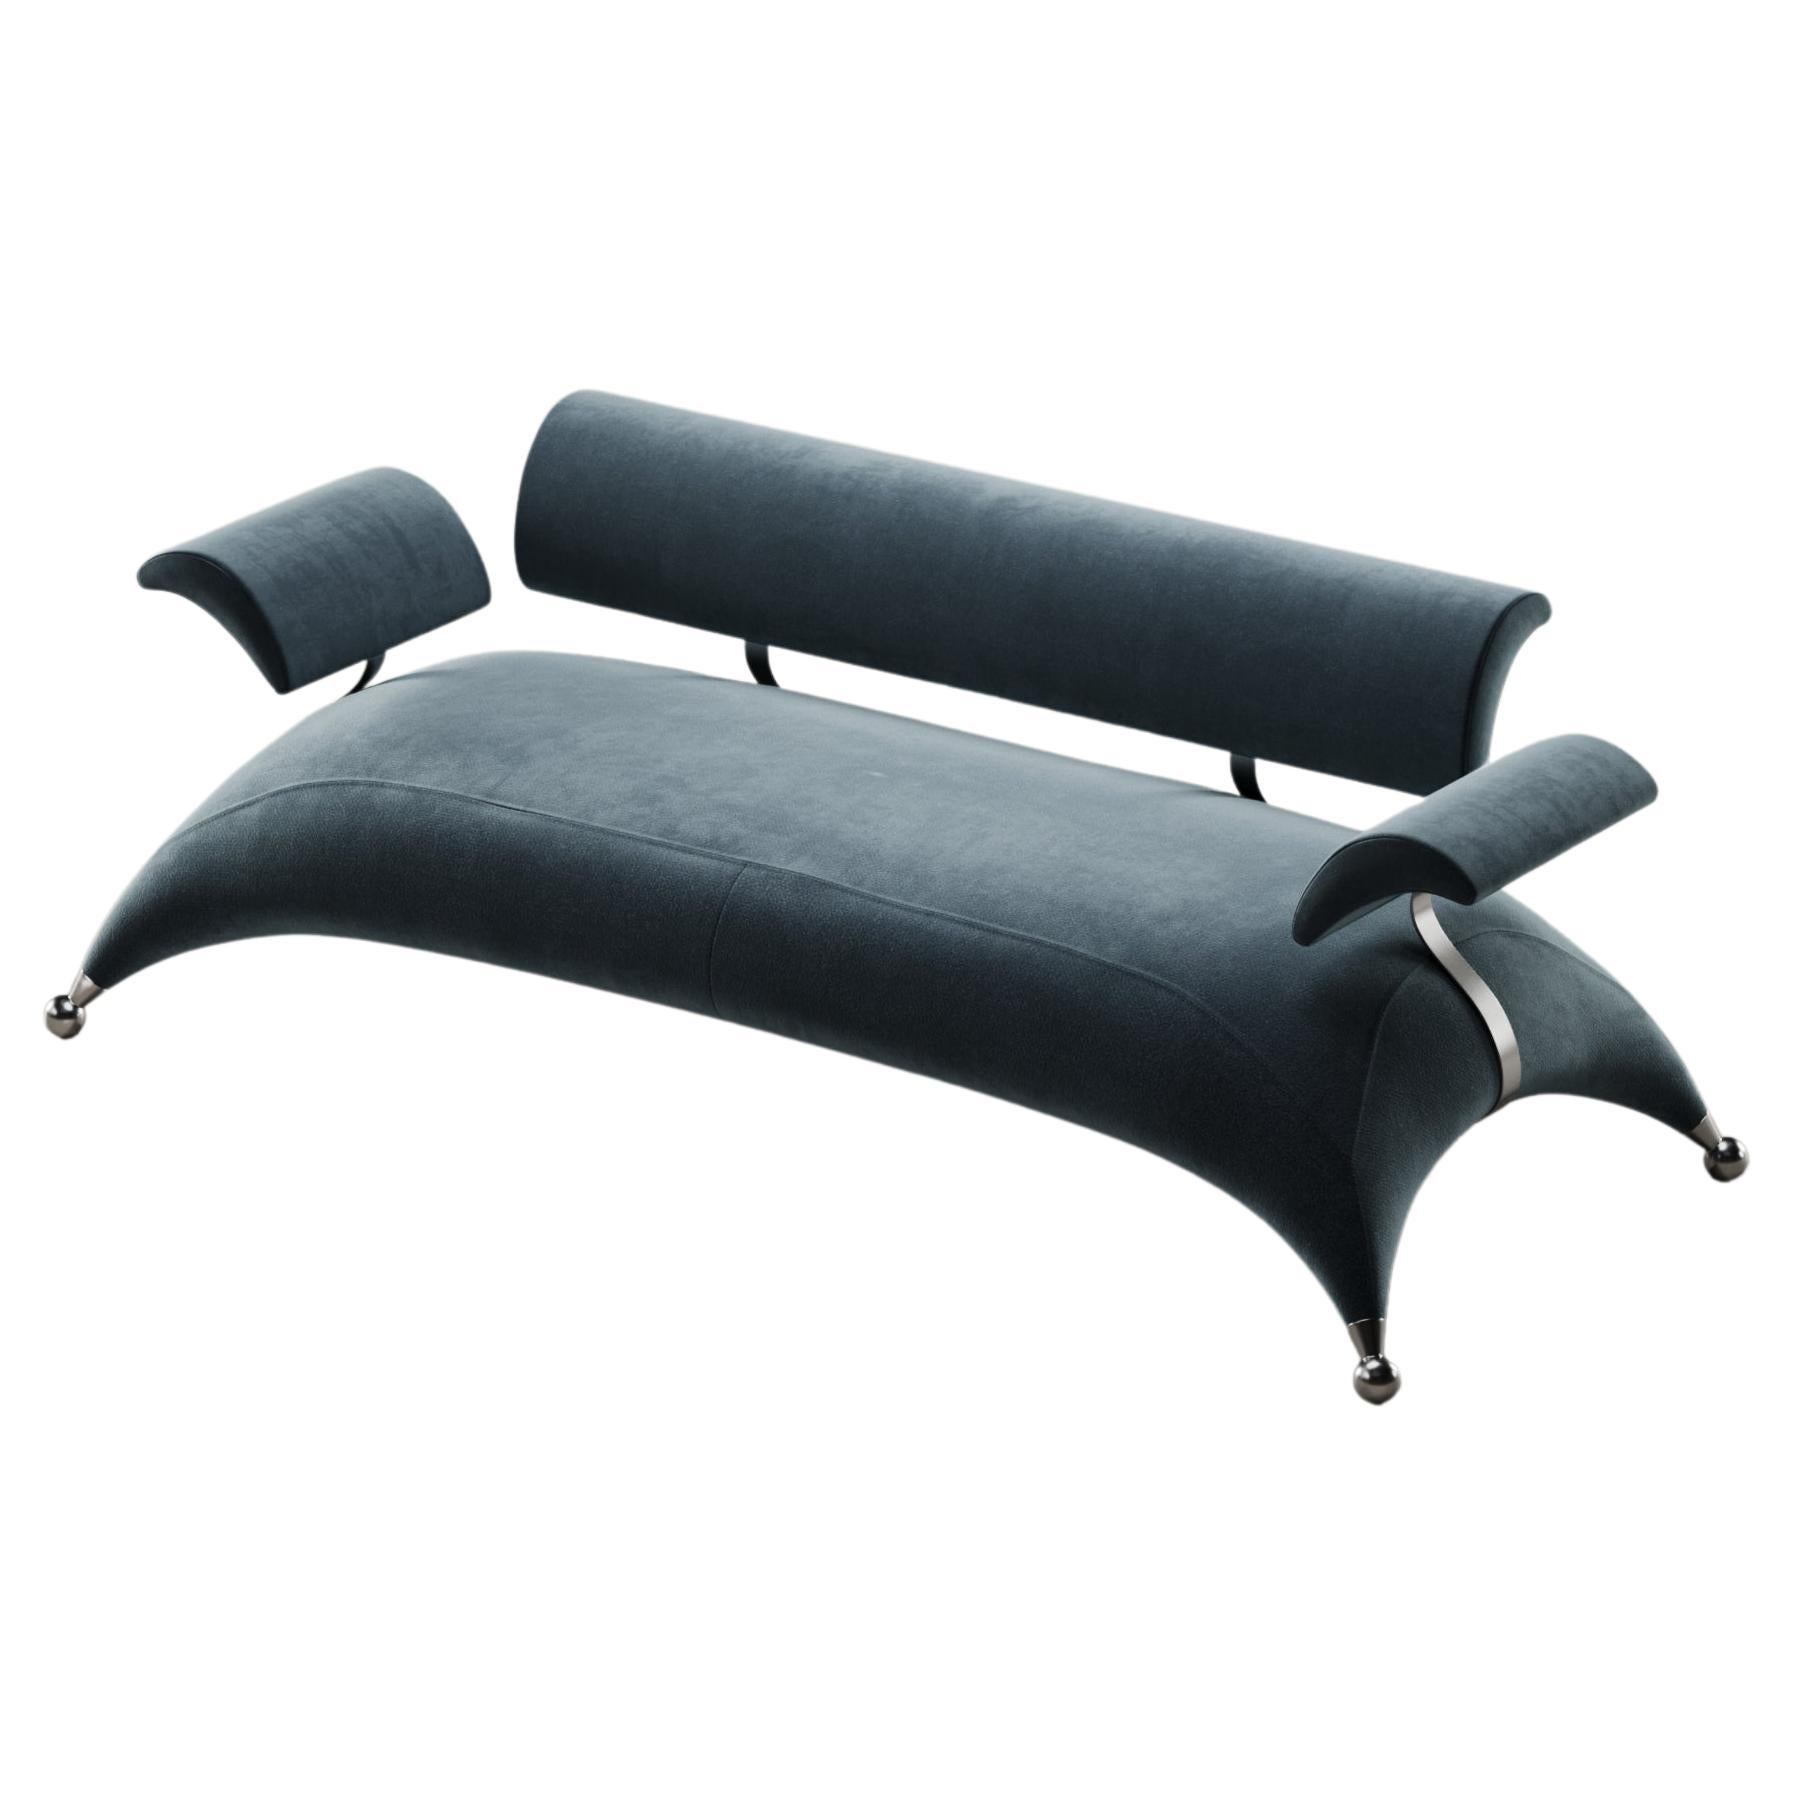 Handmade Exceptional Design Sculptural Safari sofa For Sale